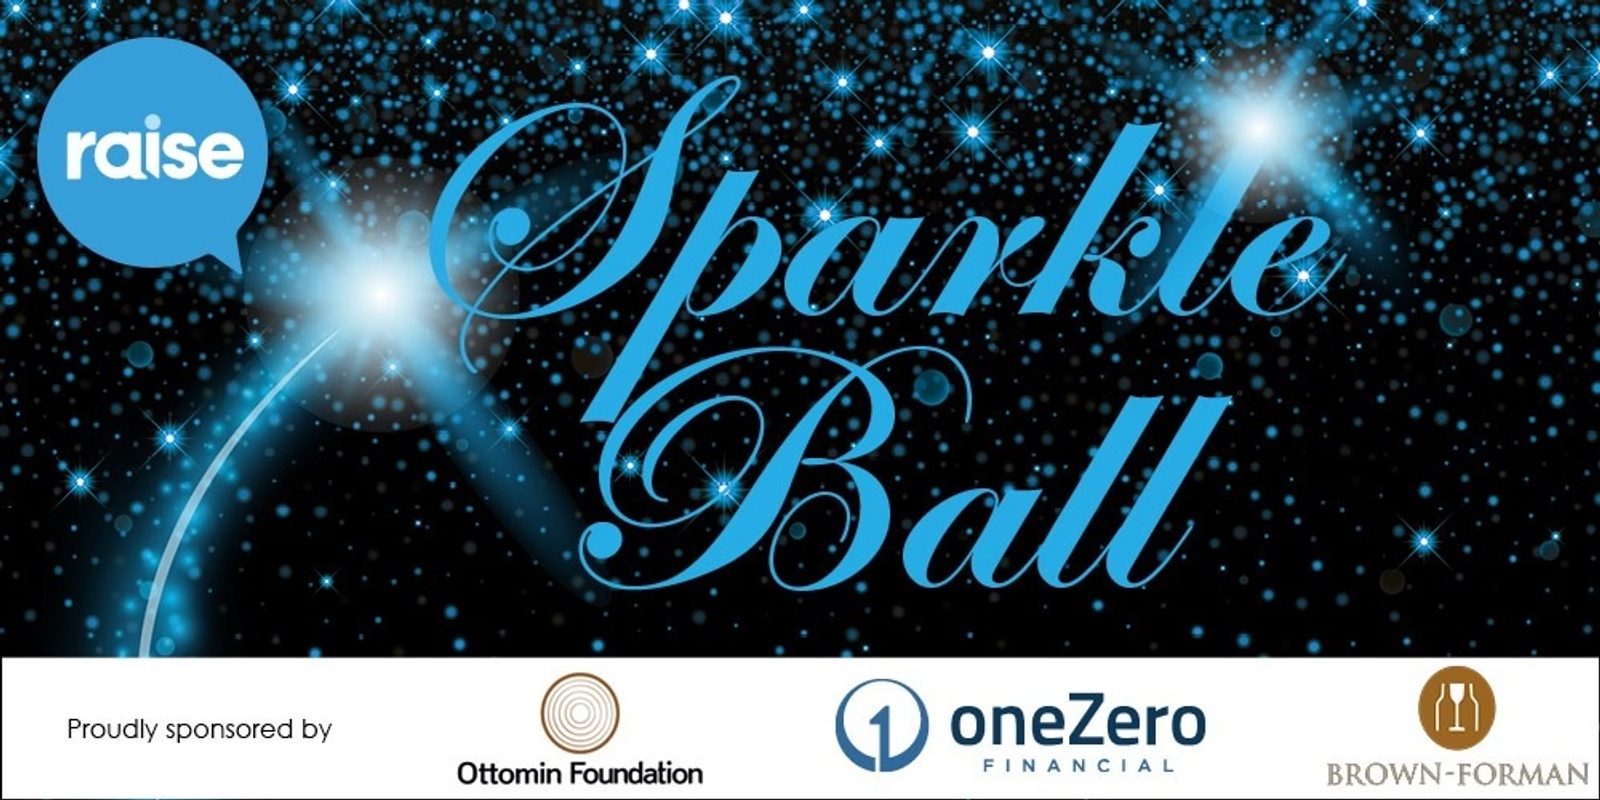 Banner image for Raise Foundation Sparkle Ball 2019